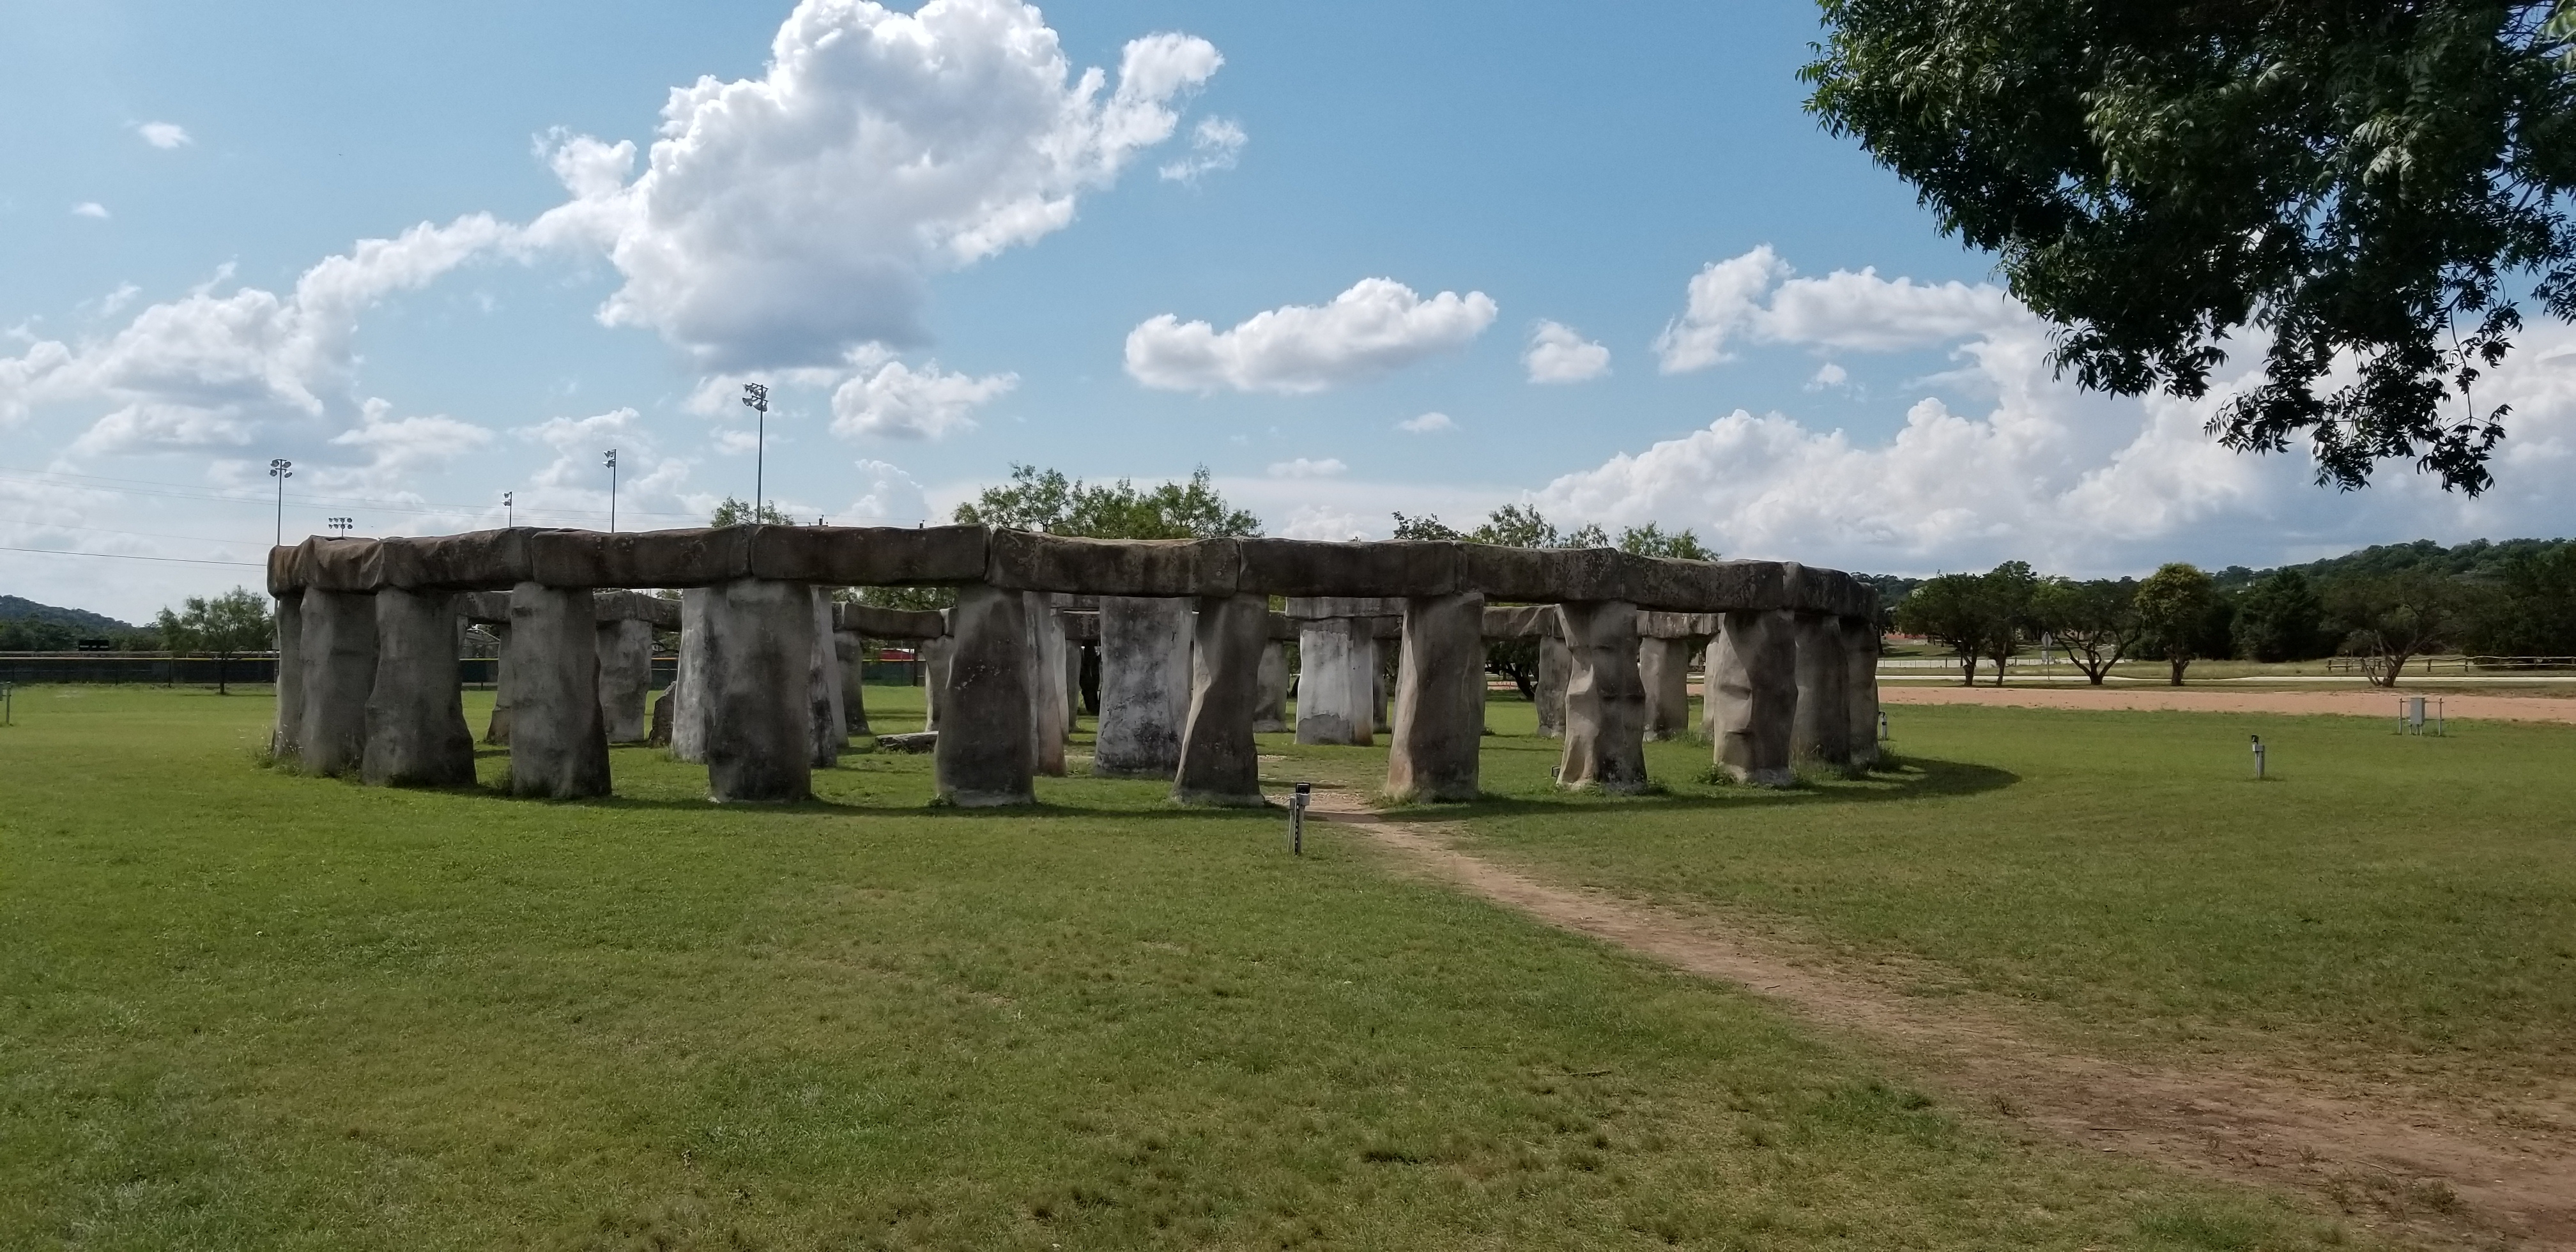 The view of Stonehenge II